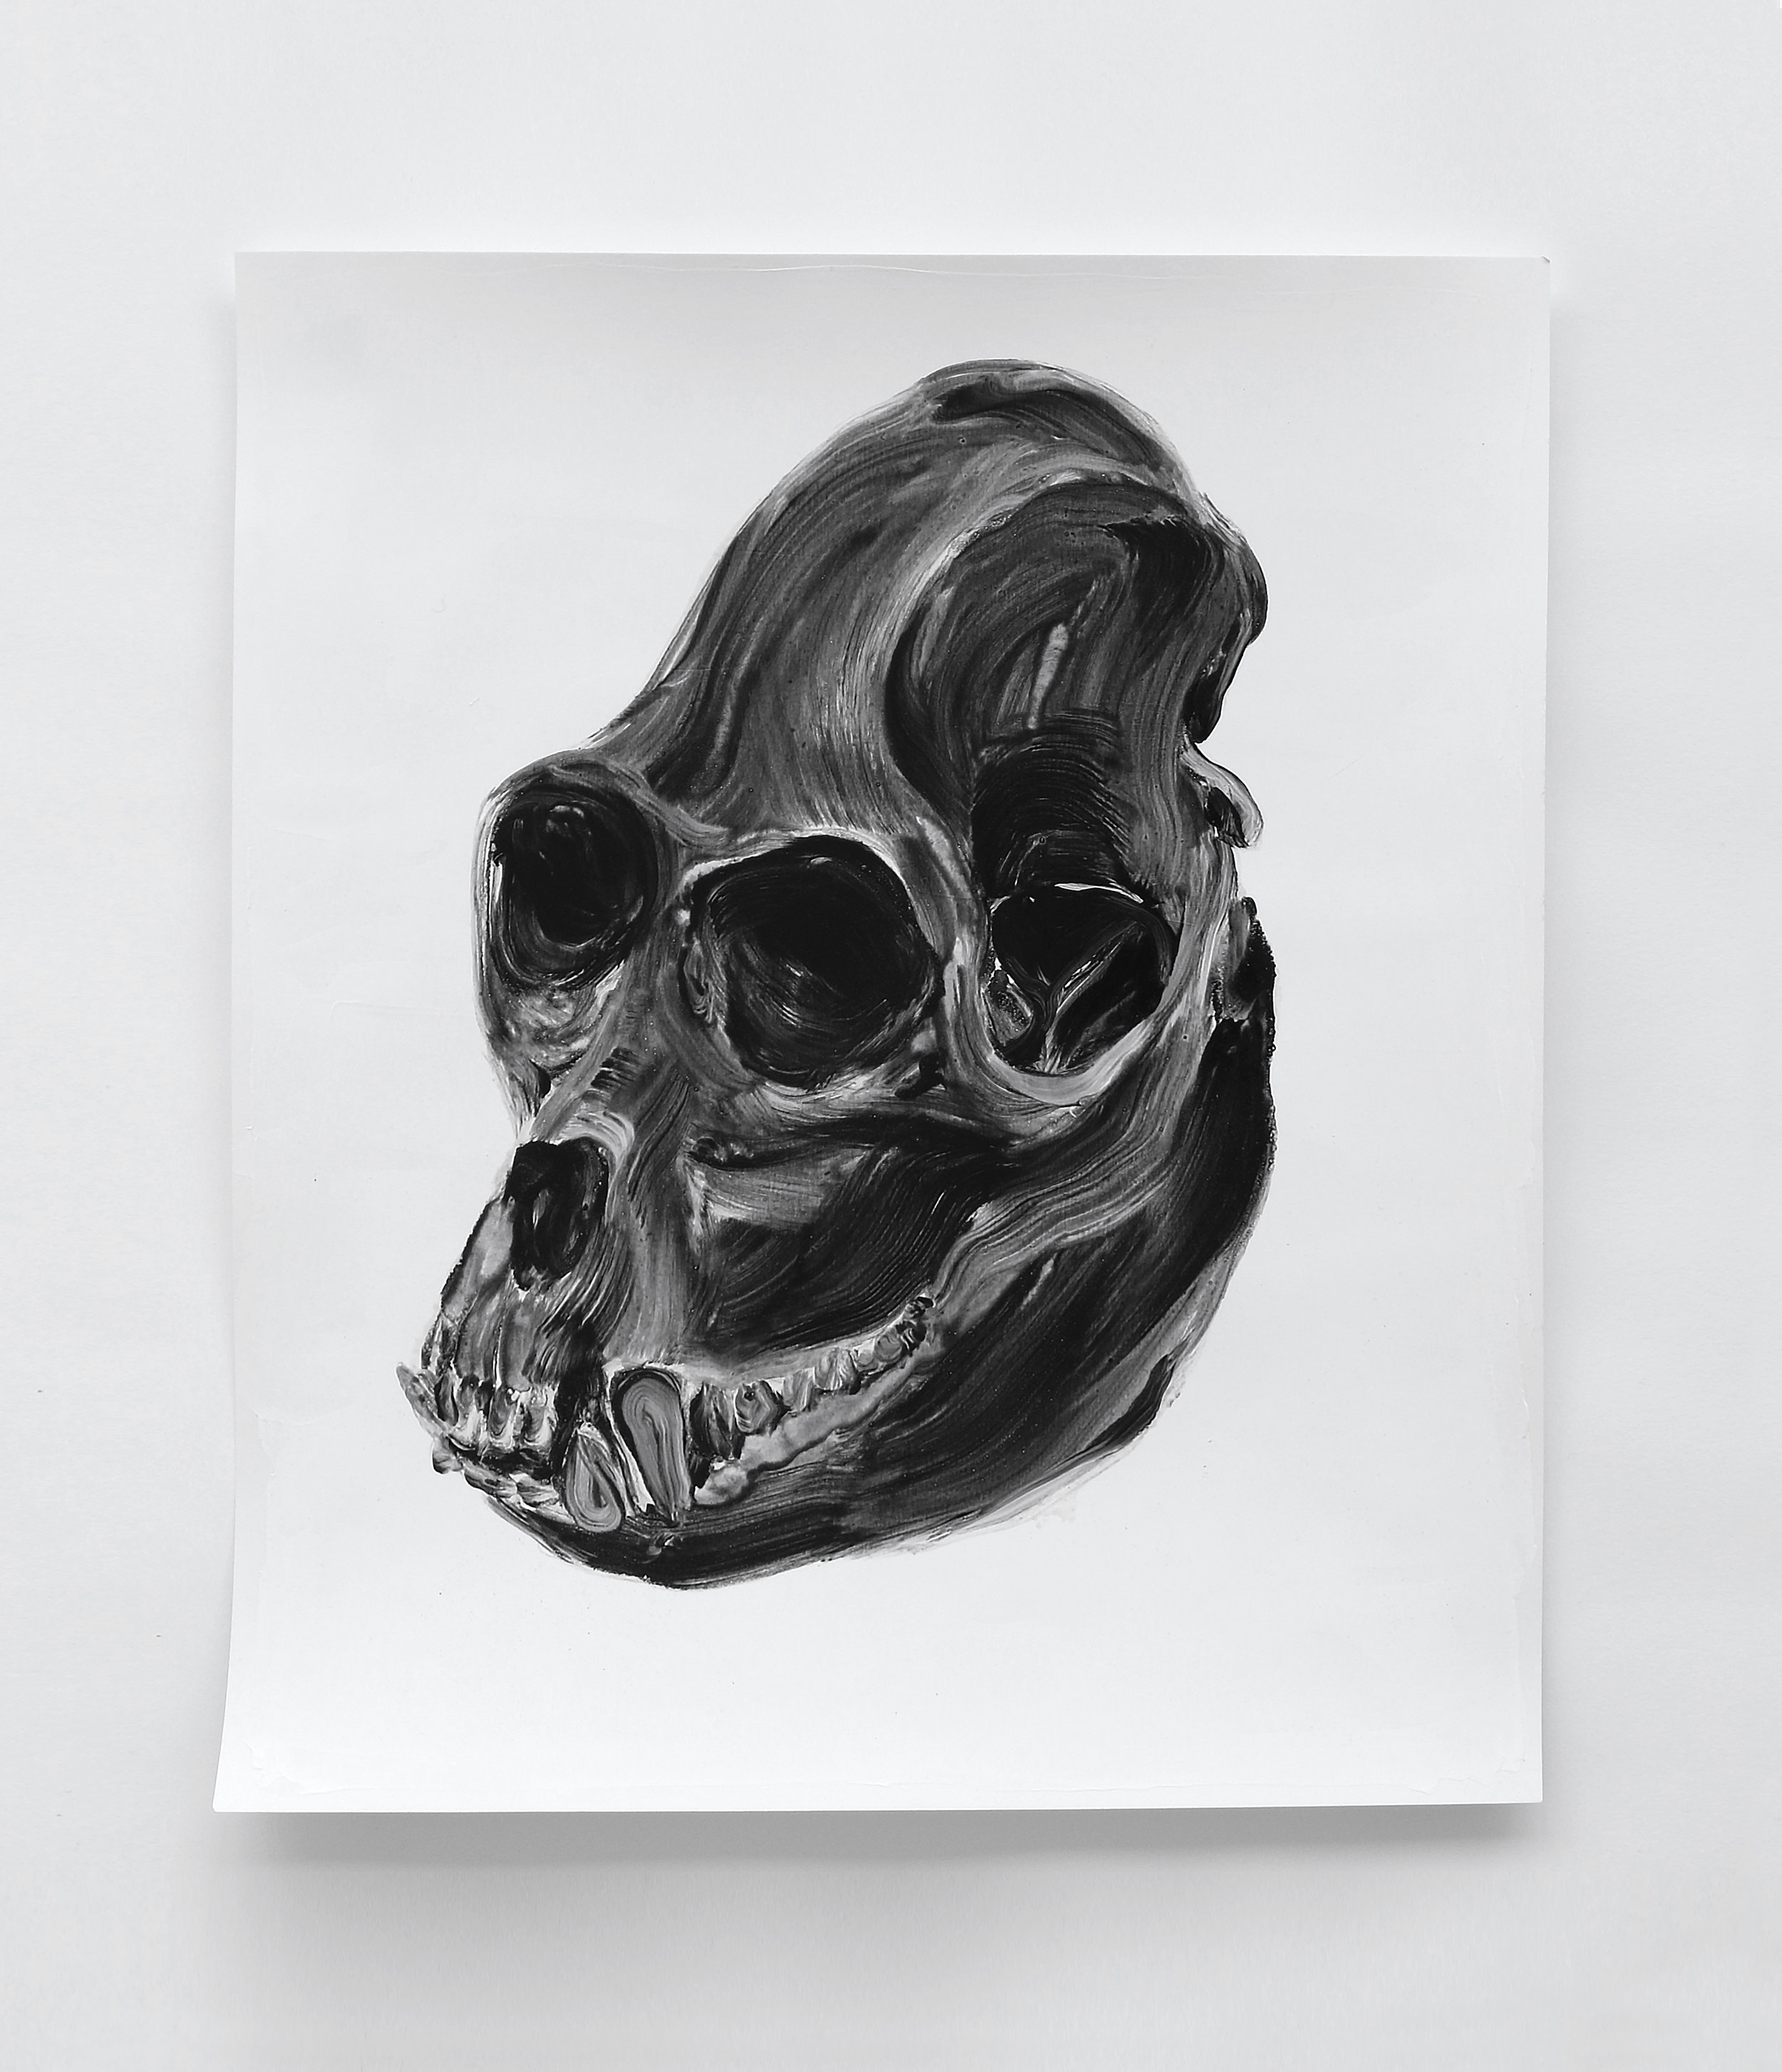  Crâne de singe hurleur / Howler monkey skull  Huile sur papier / Oil on paper  12 X 16 in / 30 X 40 cm    